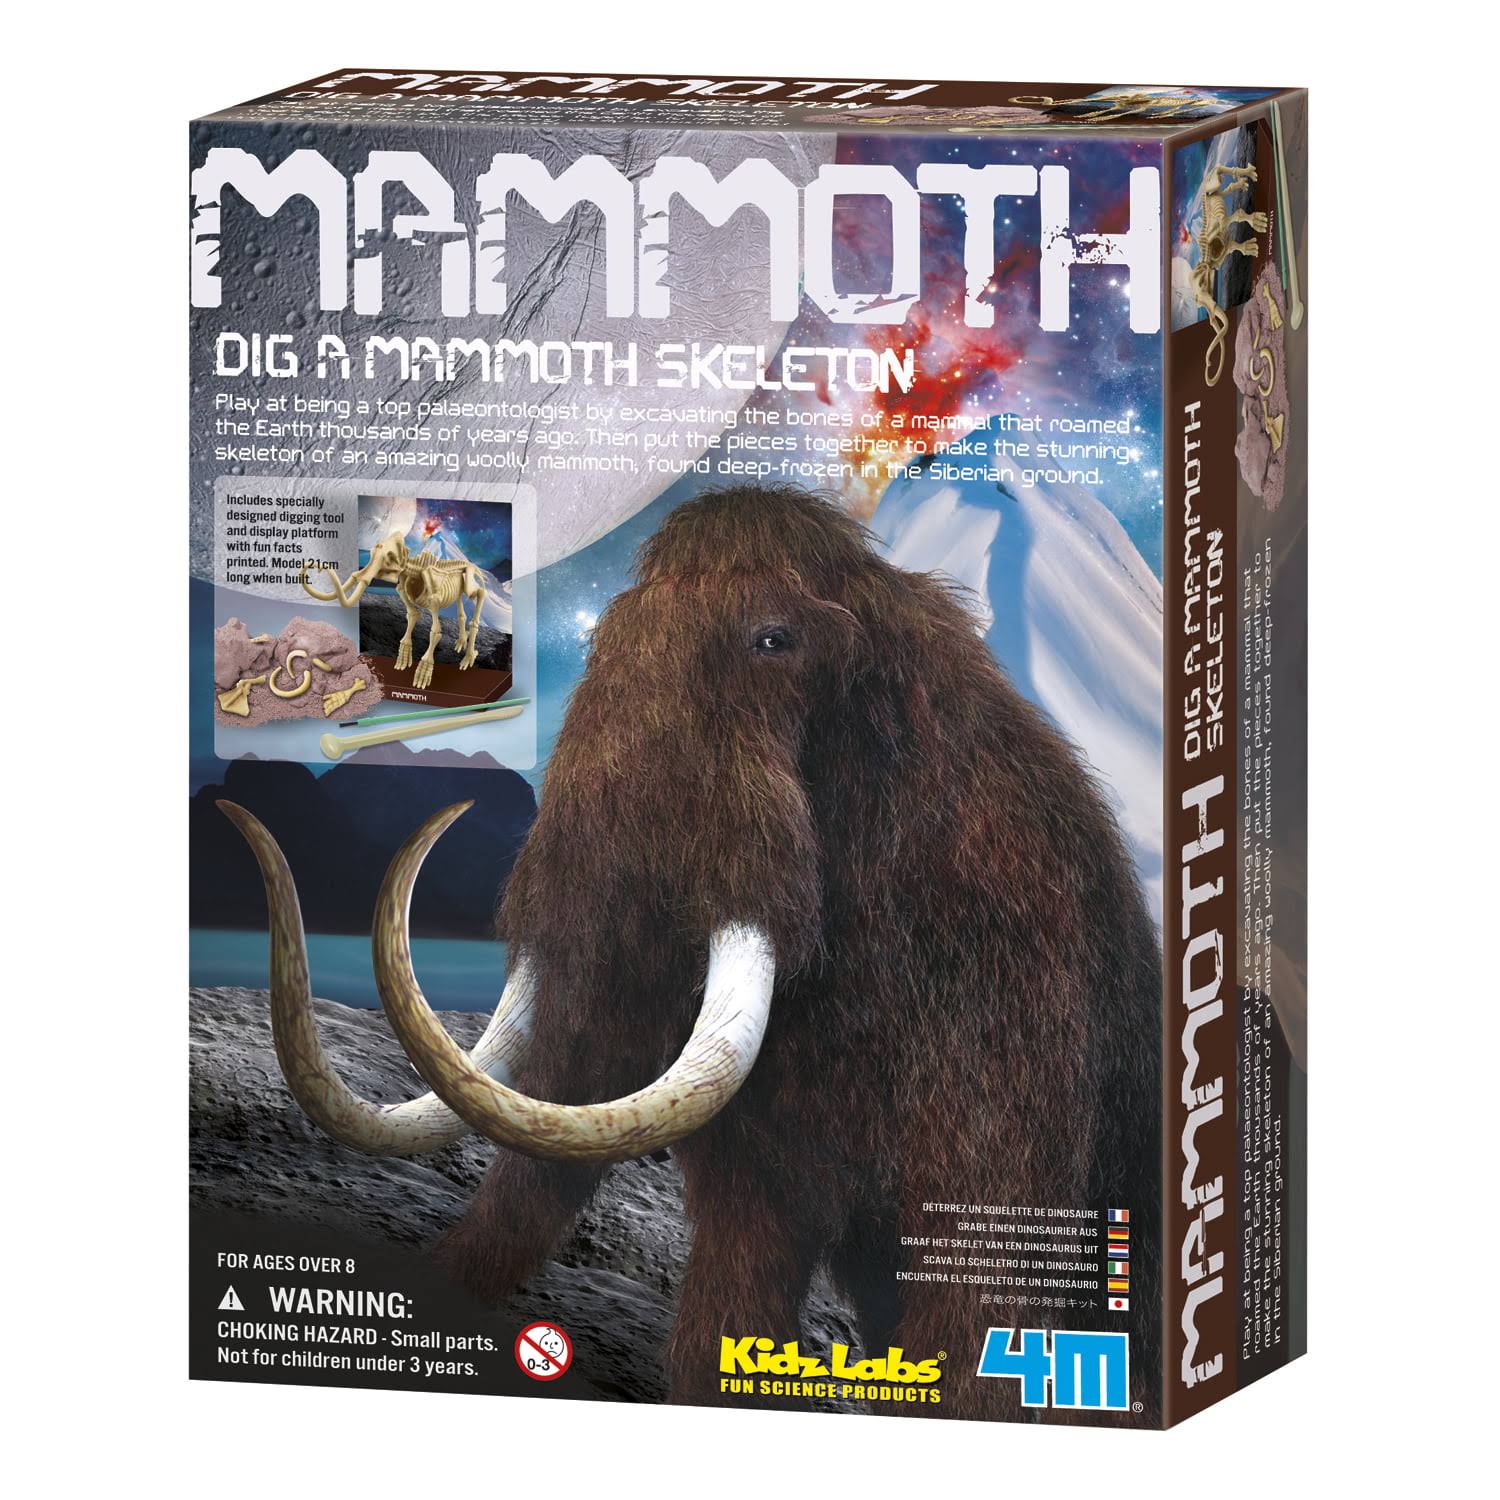 Toysmith 4M Mammoth Excavation Science Toy Kit